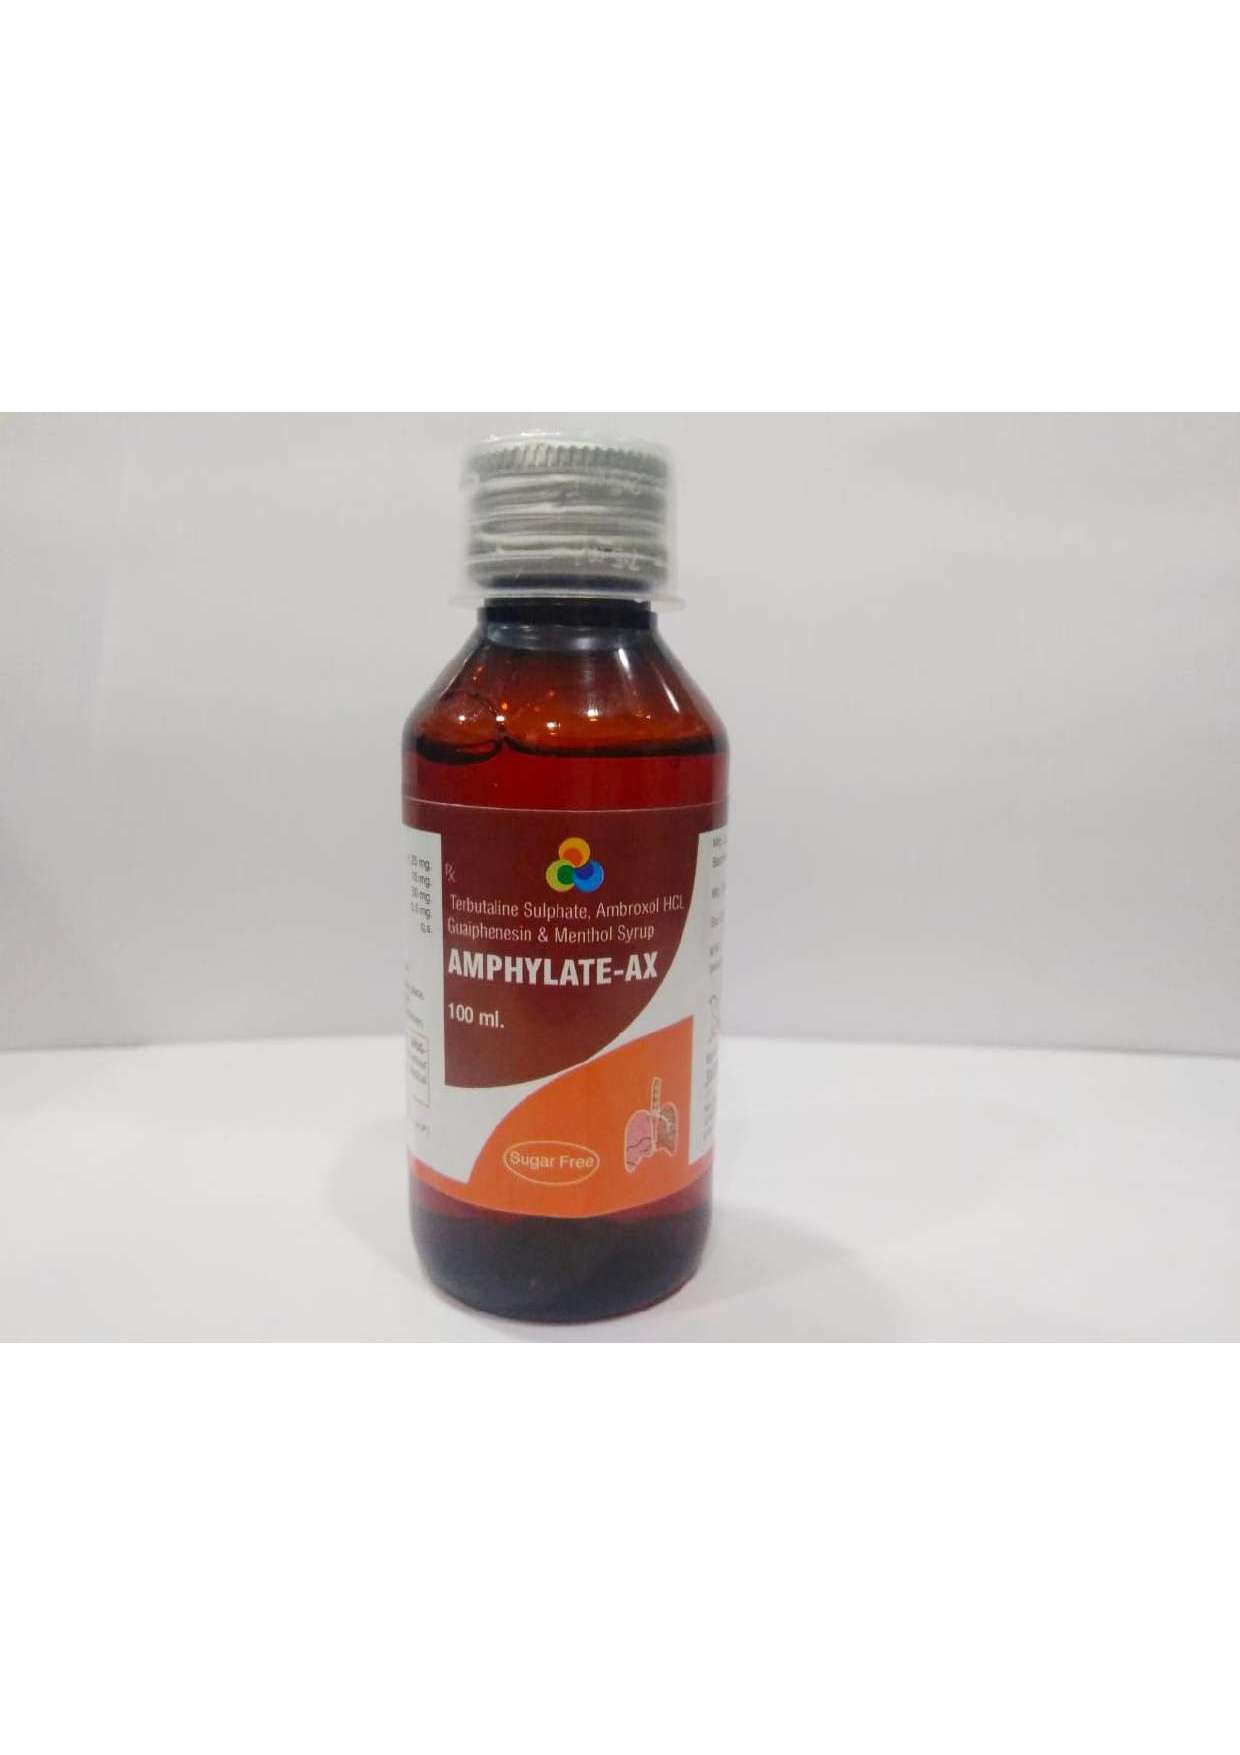 ambroxol 15mg+terbutaline1.25mg+guaifenesin 50mg+menthol (sugar free)